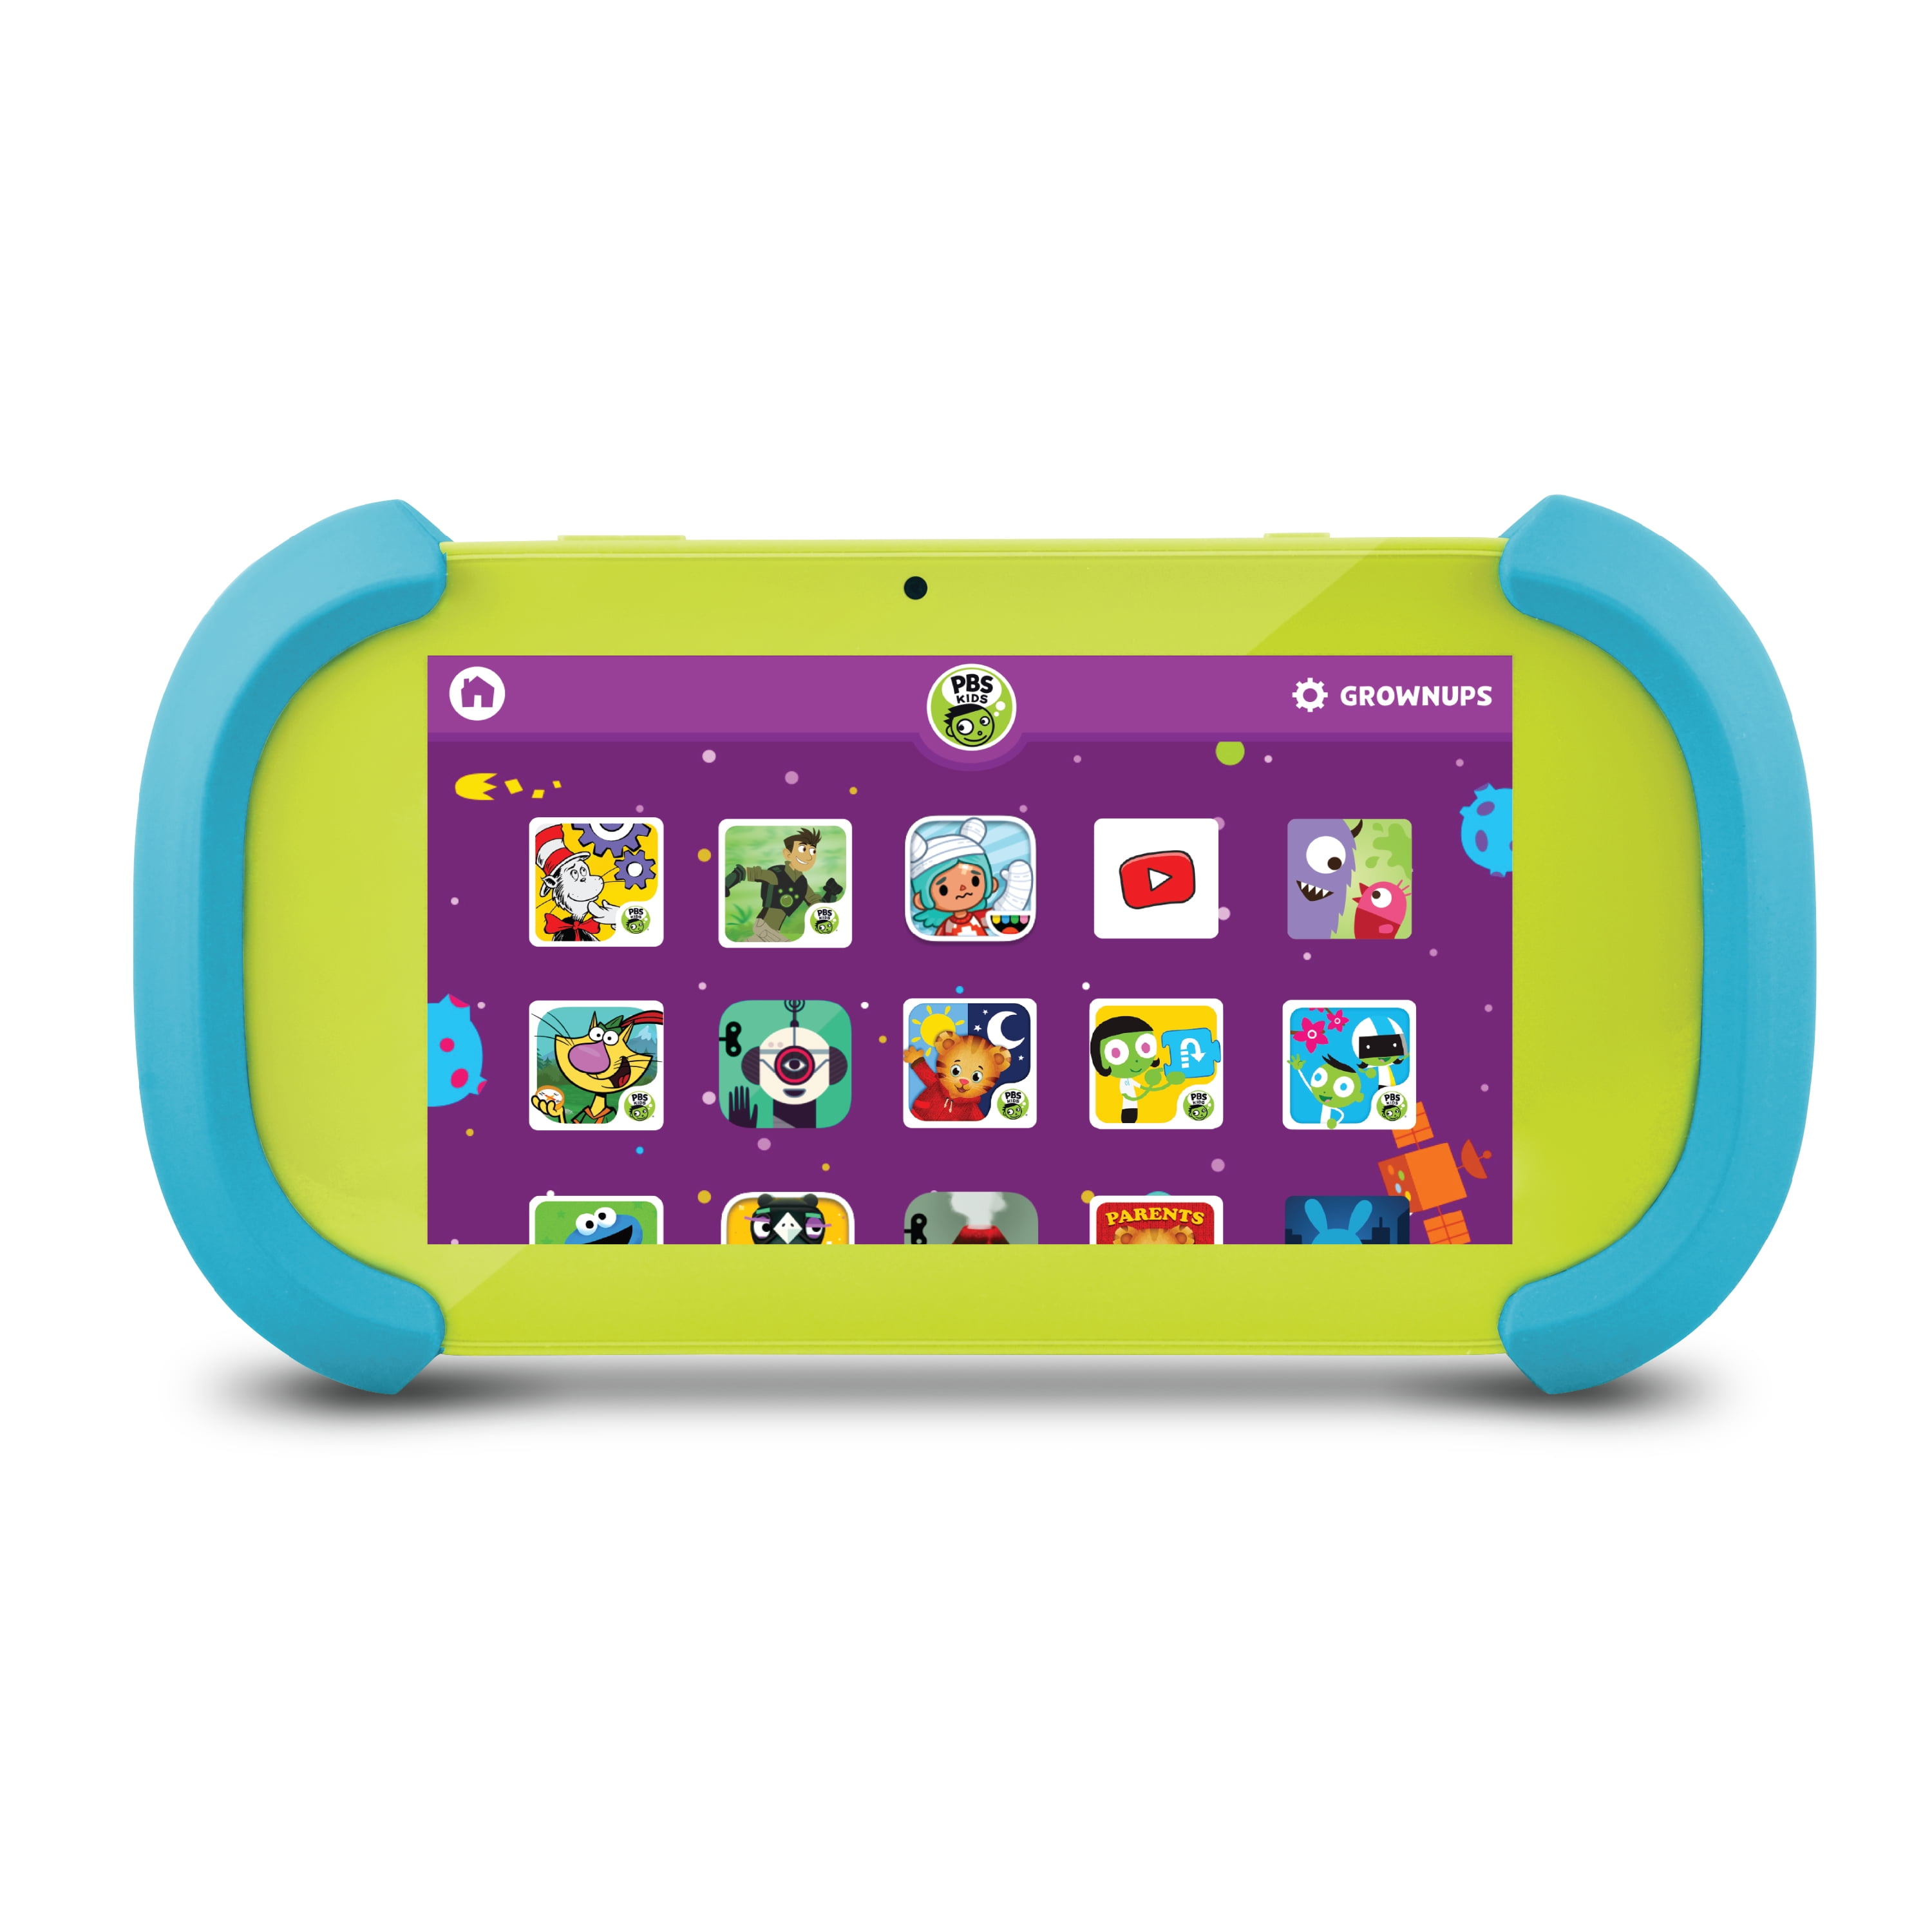 Pbs Kids Playtime Pad 2 0 7 Hd Kid Safe Android Tablet Live Tv Pbskd70 2nd Generation Walmart Com Walmart Com